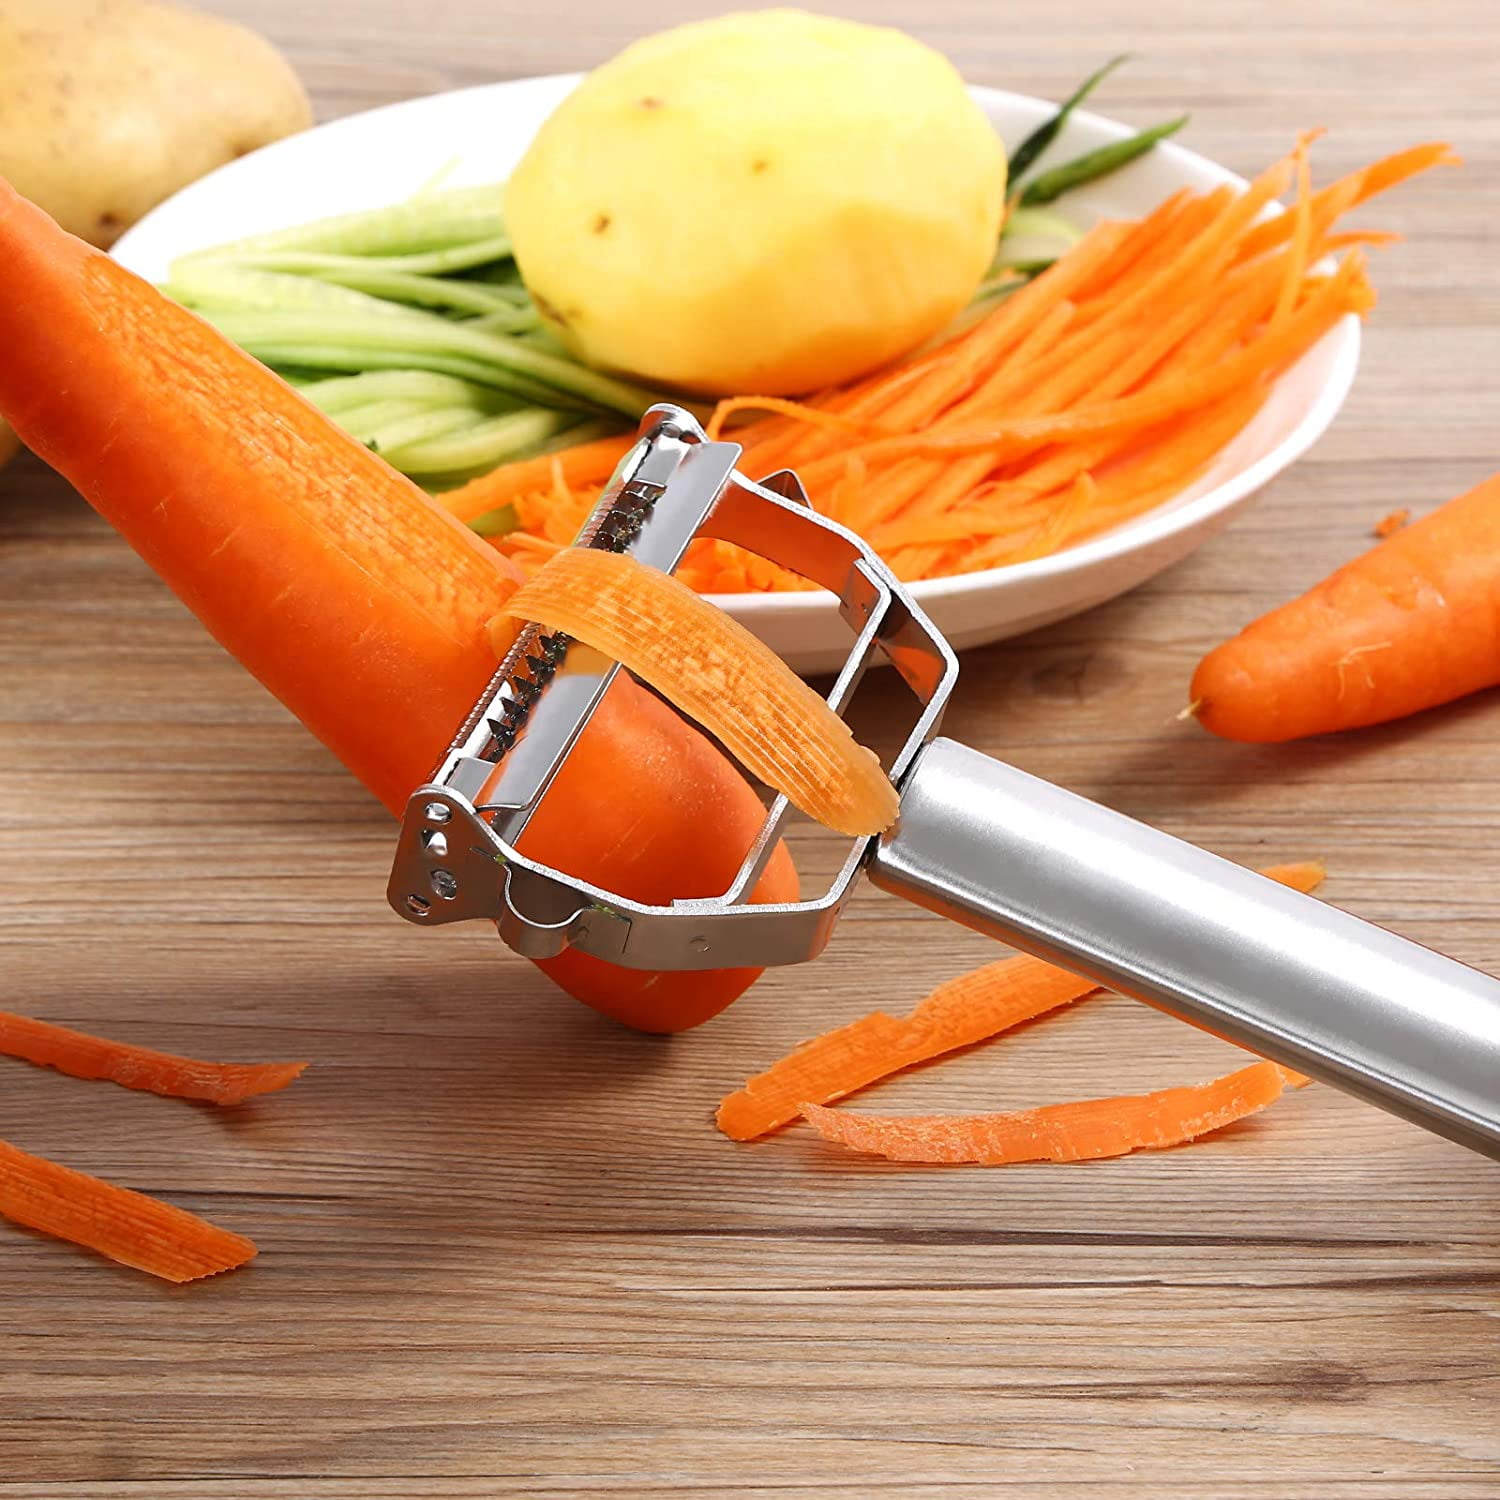 Stainless Steel Fruit Cutter Vegetable Peeler Knife Handheld Potato  Cucumber Carrot Grater Multifunction For Home Kitchen Gadget